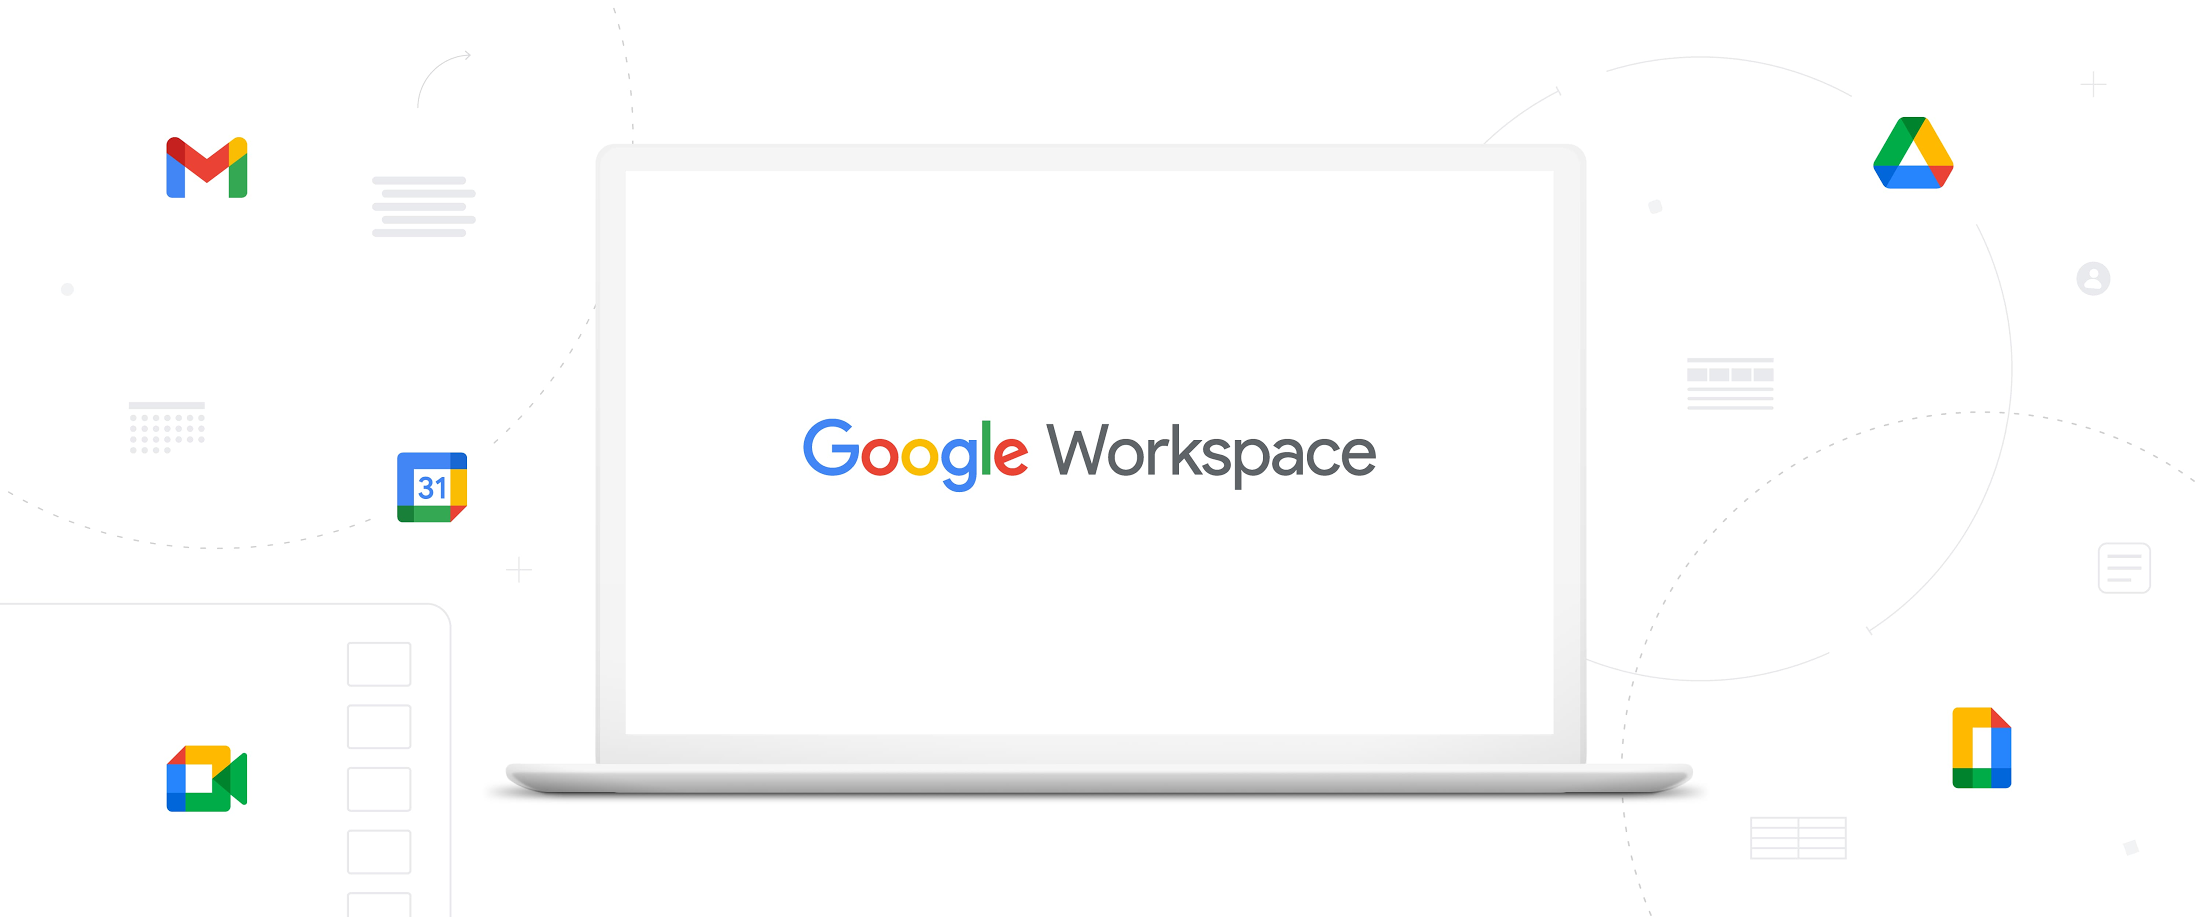 Google Workspace Features Update Summary: December 2020